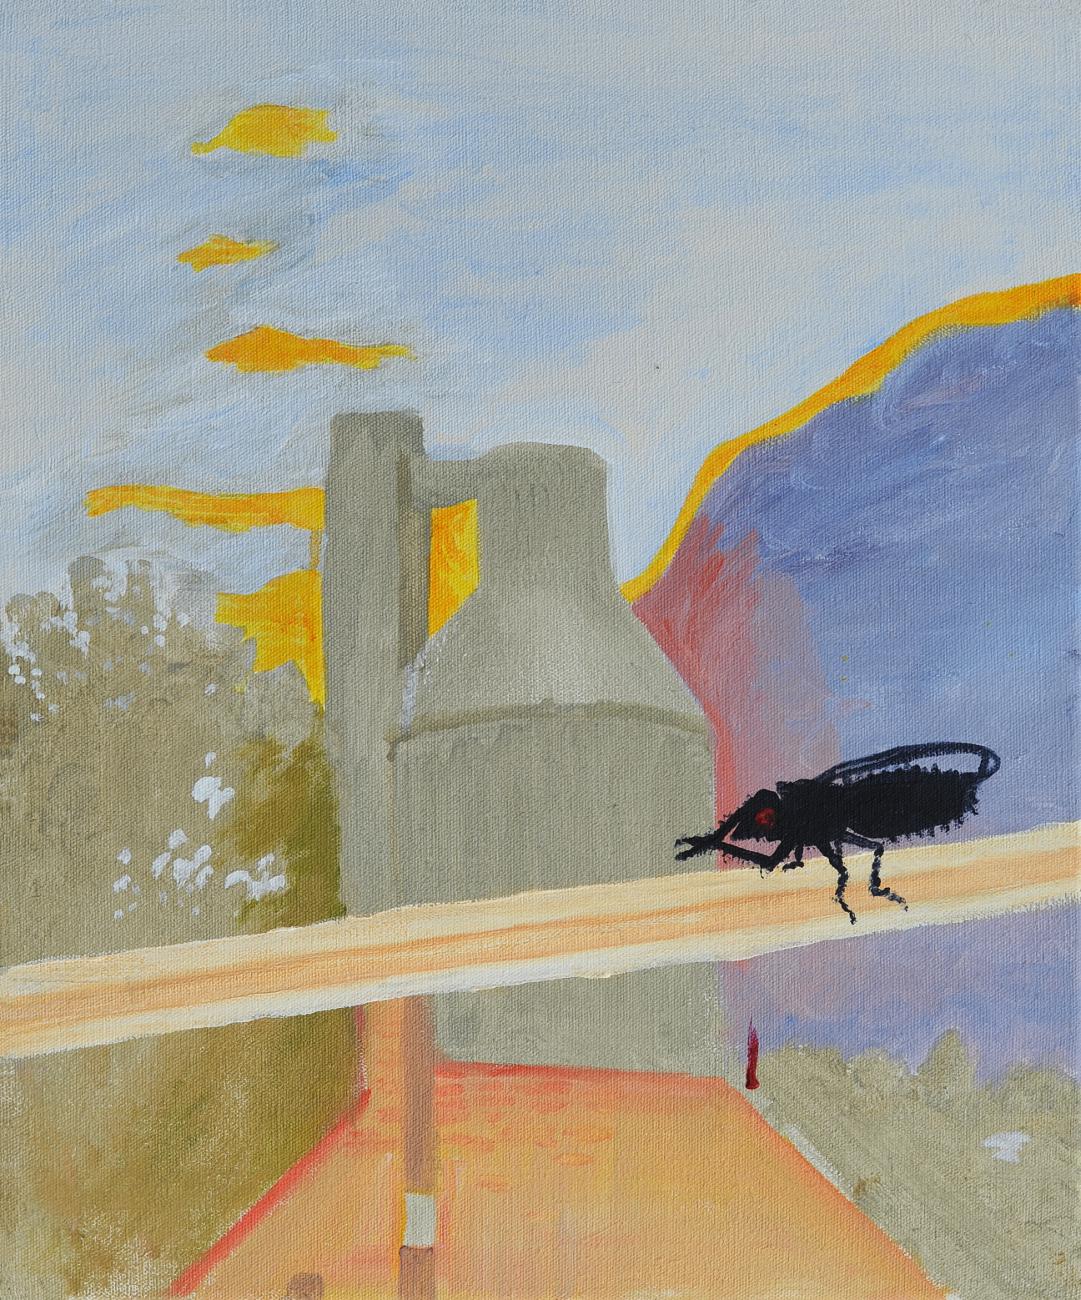 Jan Karpíšek: The Problem Of A Fly, acryl on canvas, 60x50 cm, 2011